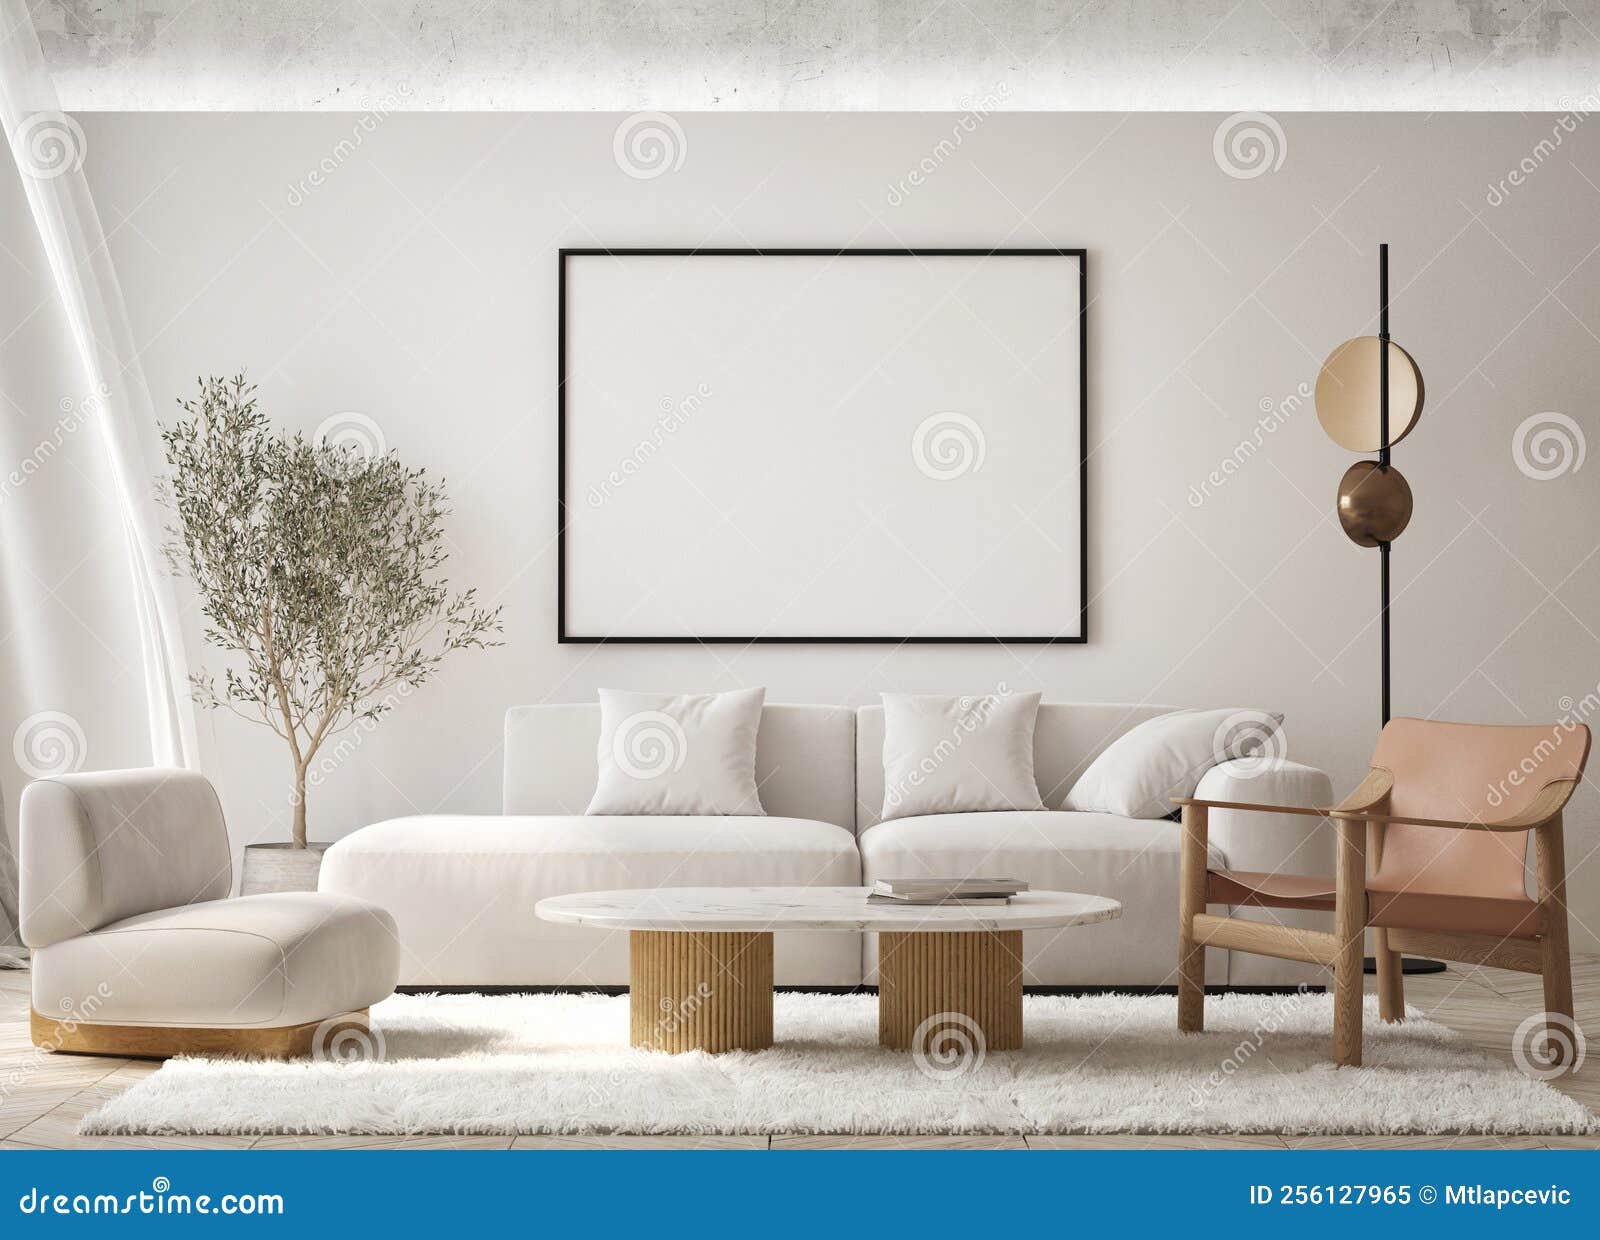 mock up poster in modern home interior background, living room, scandinavian style 3d render